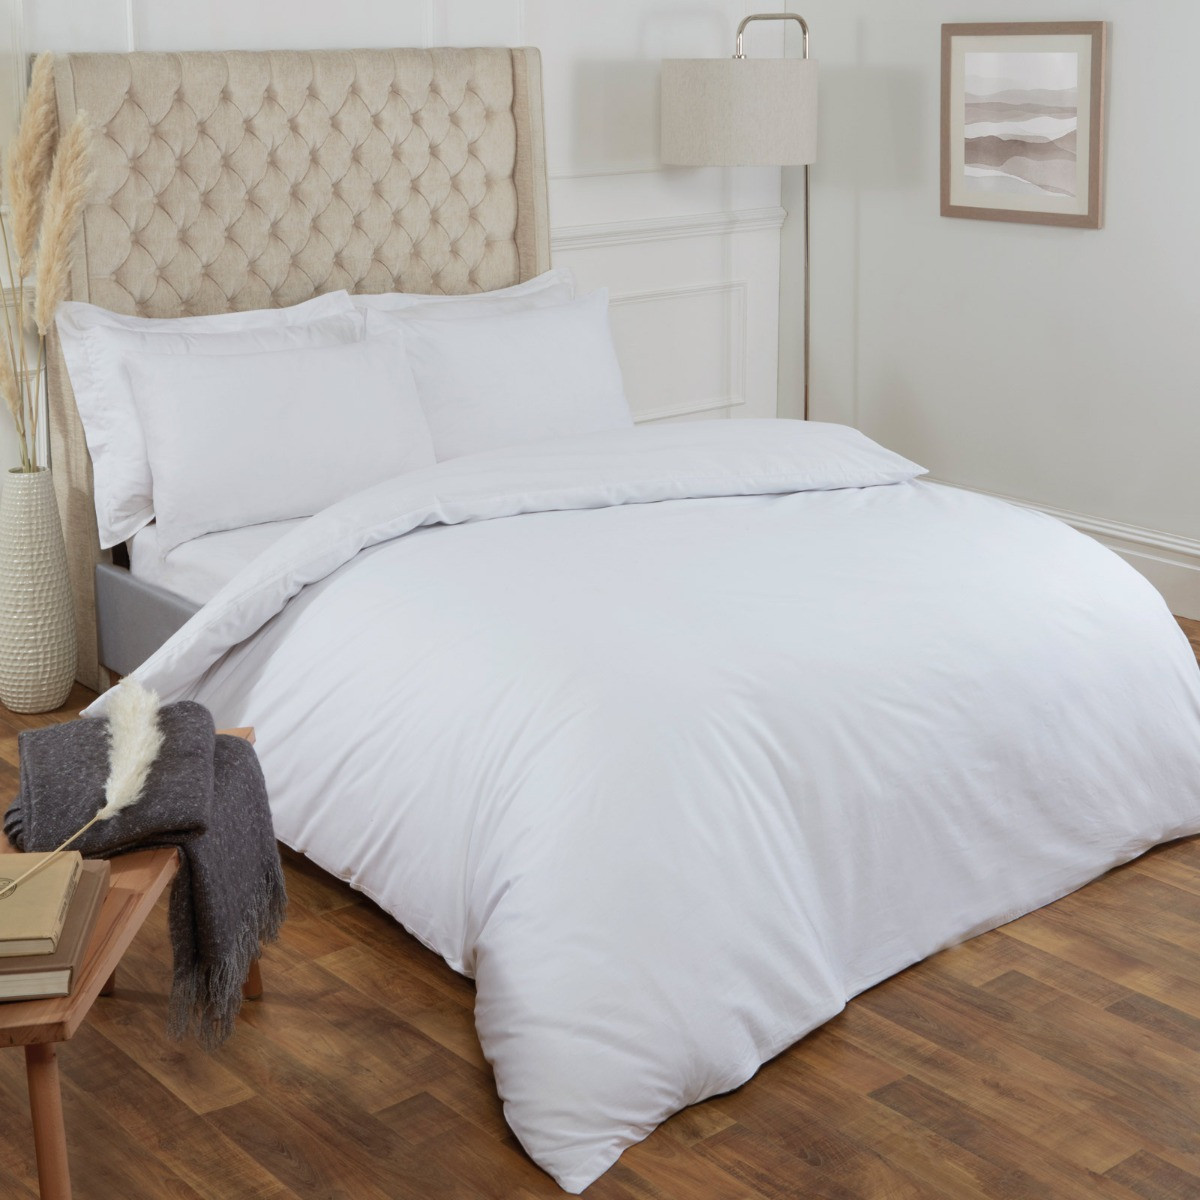 Highams Plain 100% Cotton Duvet Cover with Pillow Case Bedding Set, White - Double>